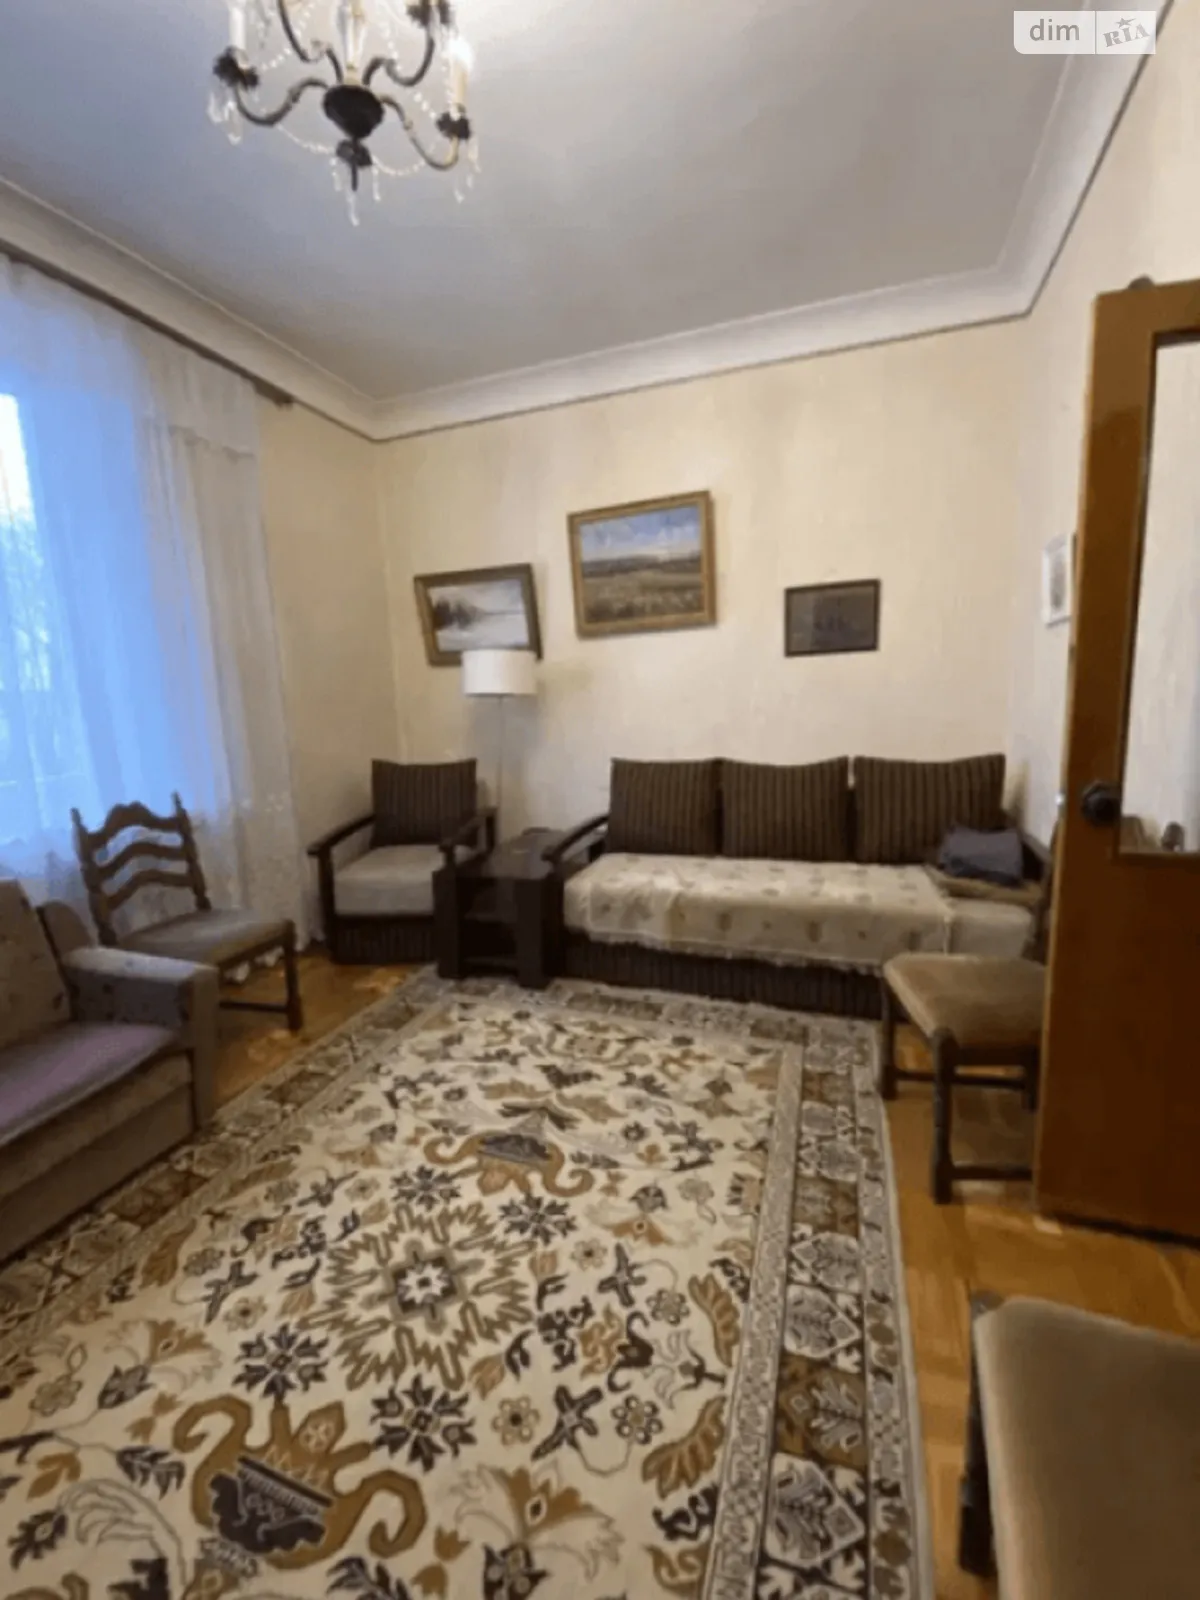 Сдается в аренду 2-комнатная квартира 55 кв. м в Харькове, ул. Бакулина, 14 - фото 1